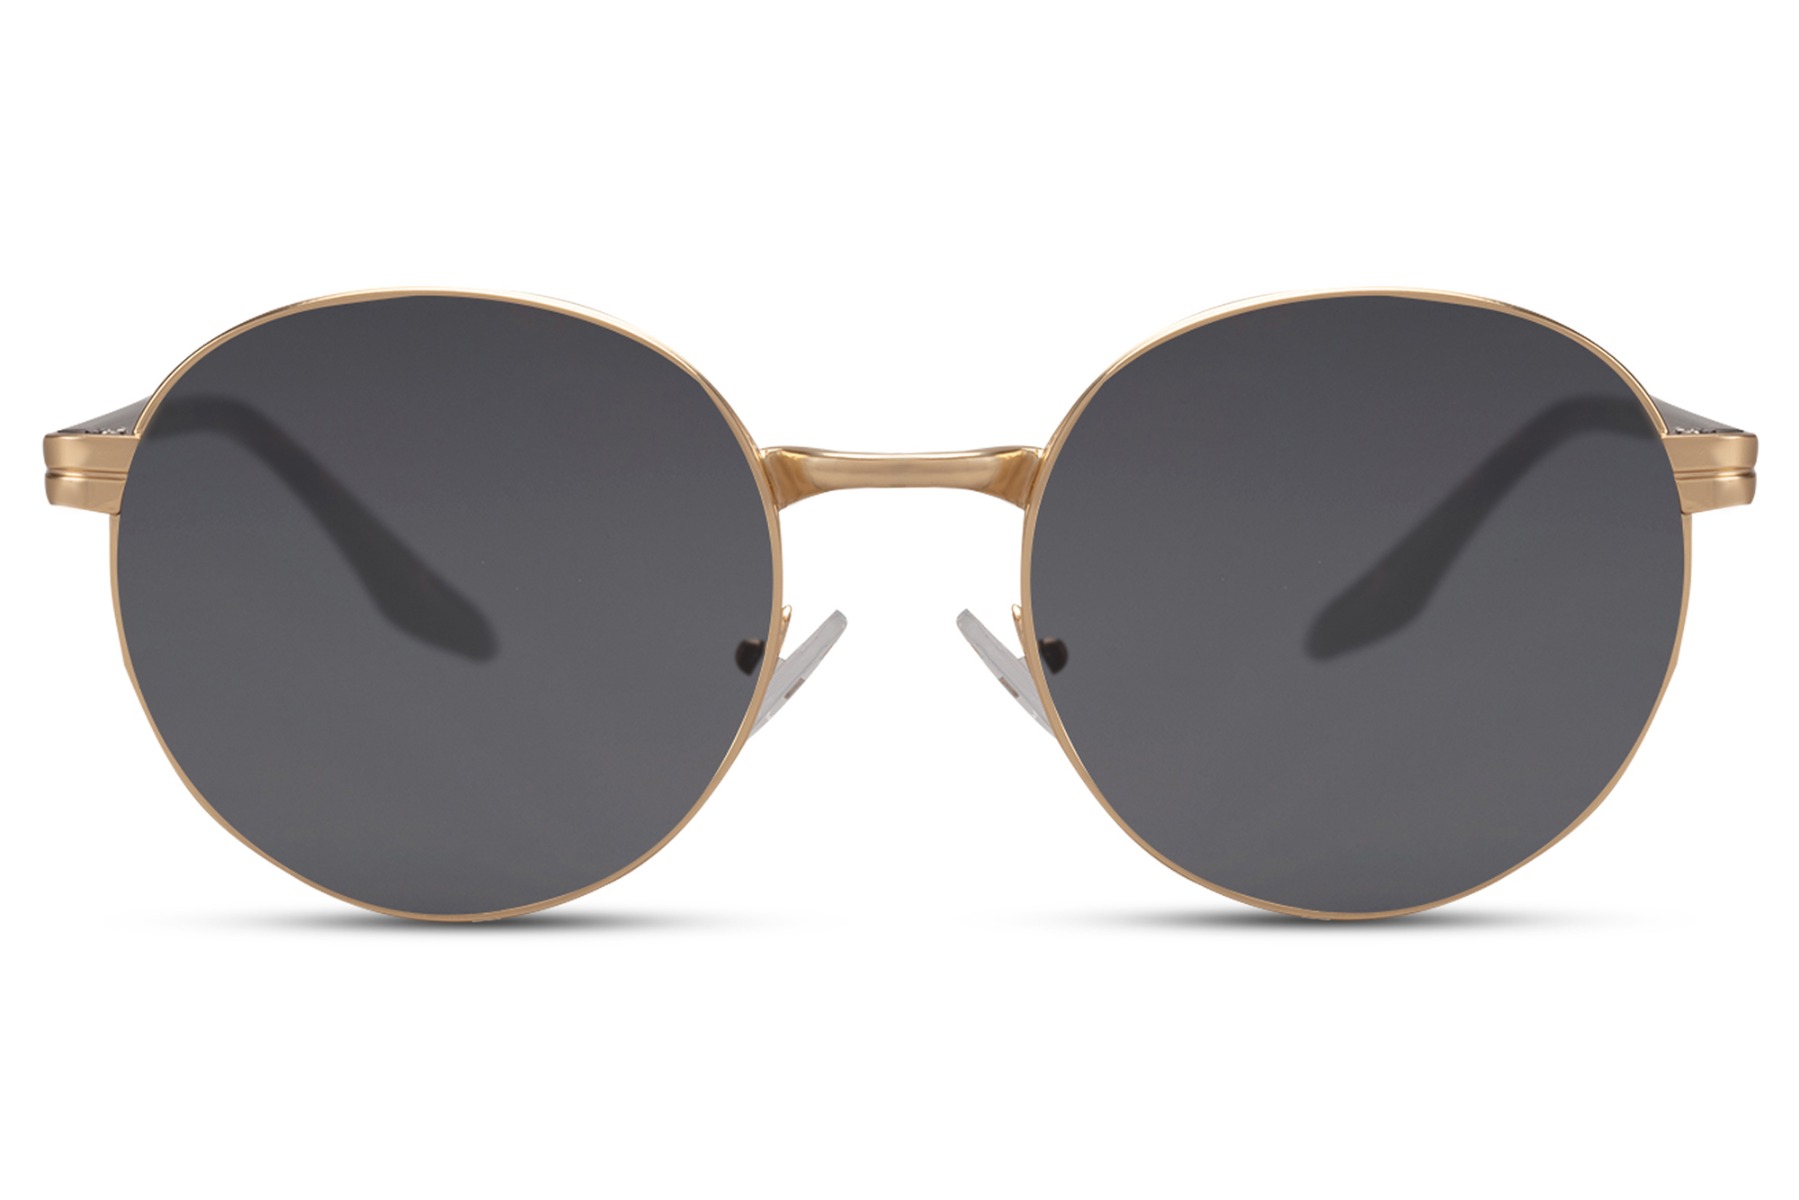 Shop Longway Black/Mirror Sunglasses for Men